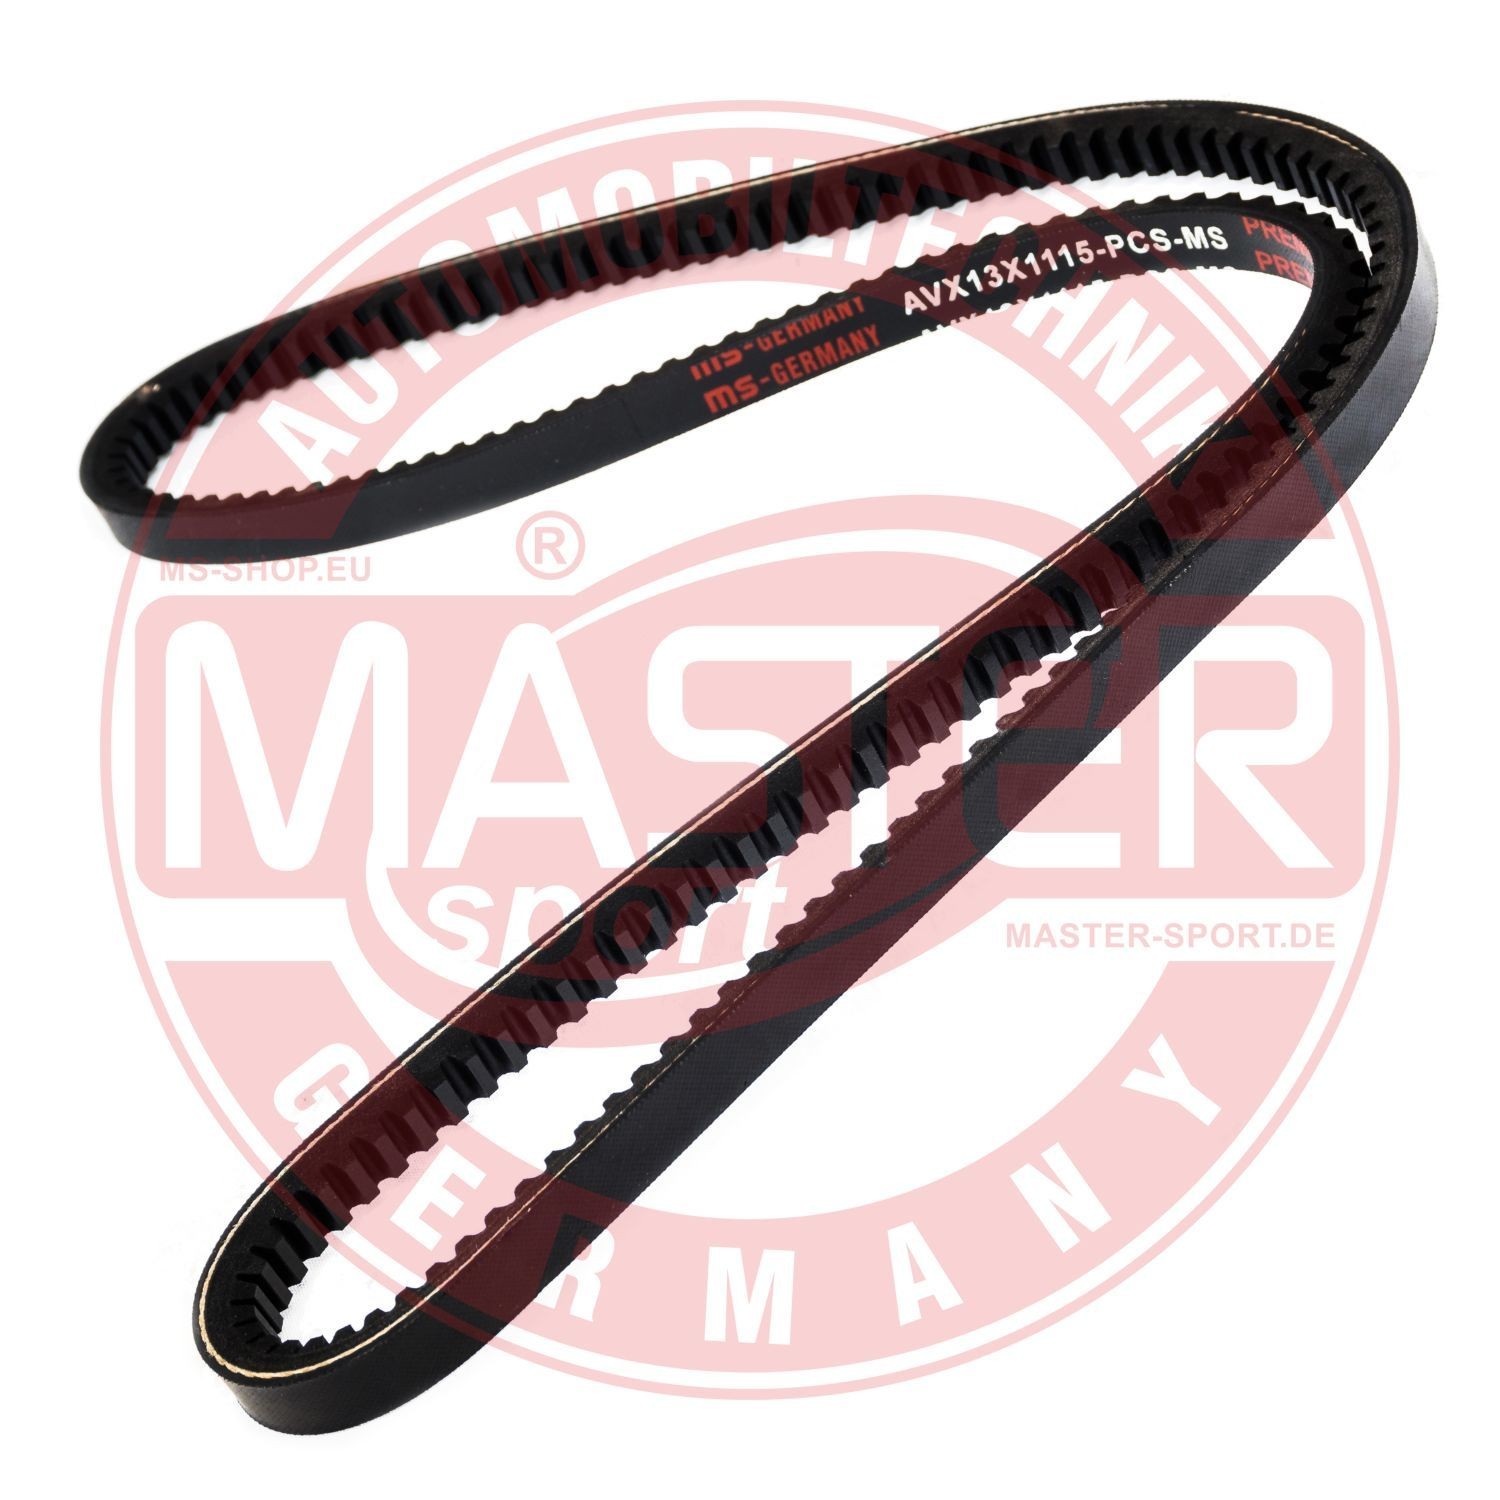 Vee-belt MASTER-SPORT Length: 1115mm - AVX-13X1115-PCS-MS